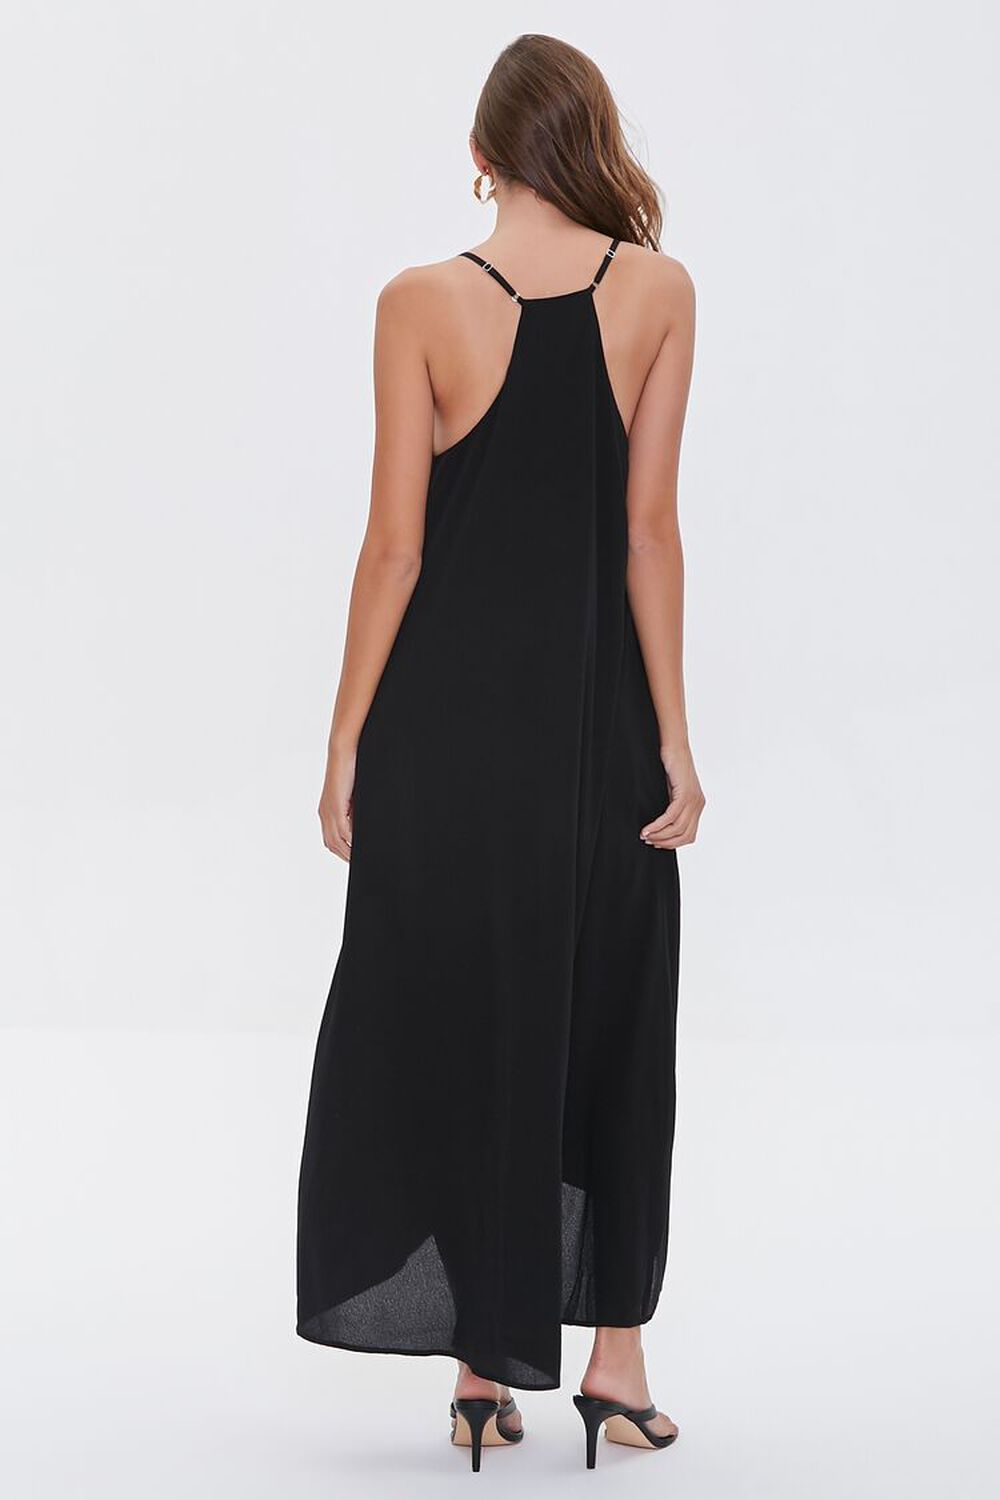 BLACK Cami Maxi Dress, image 3